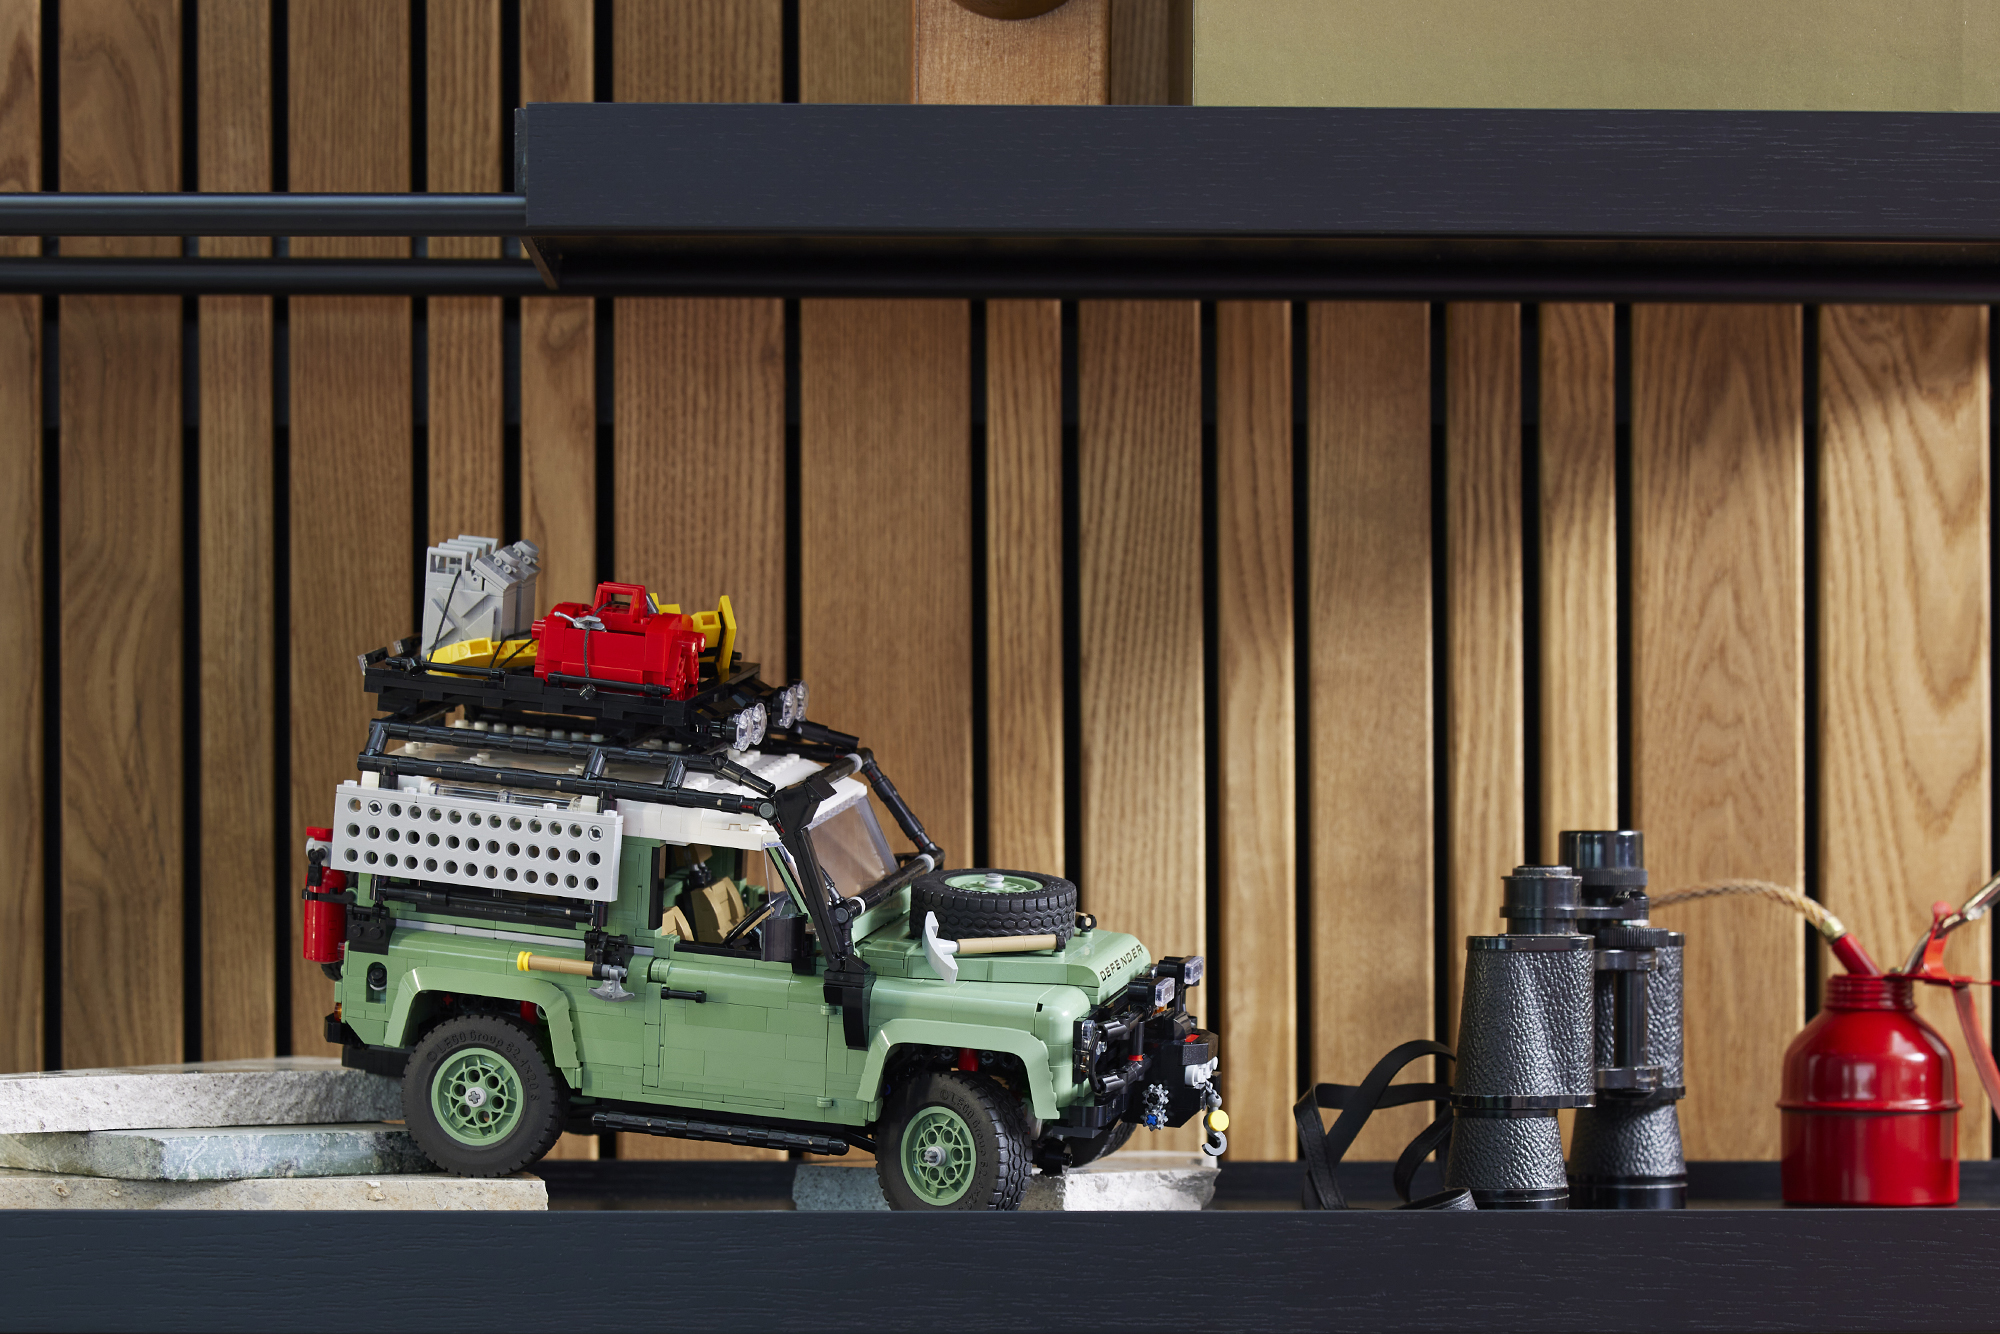 Lego Range Rover